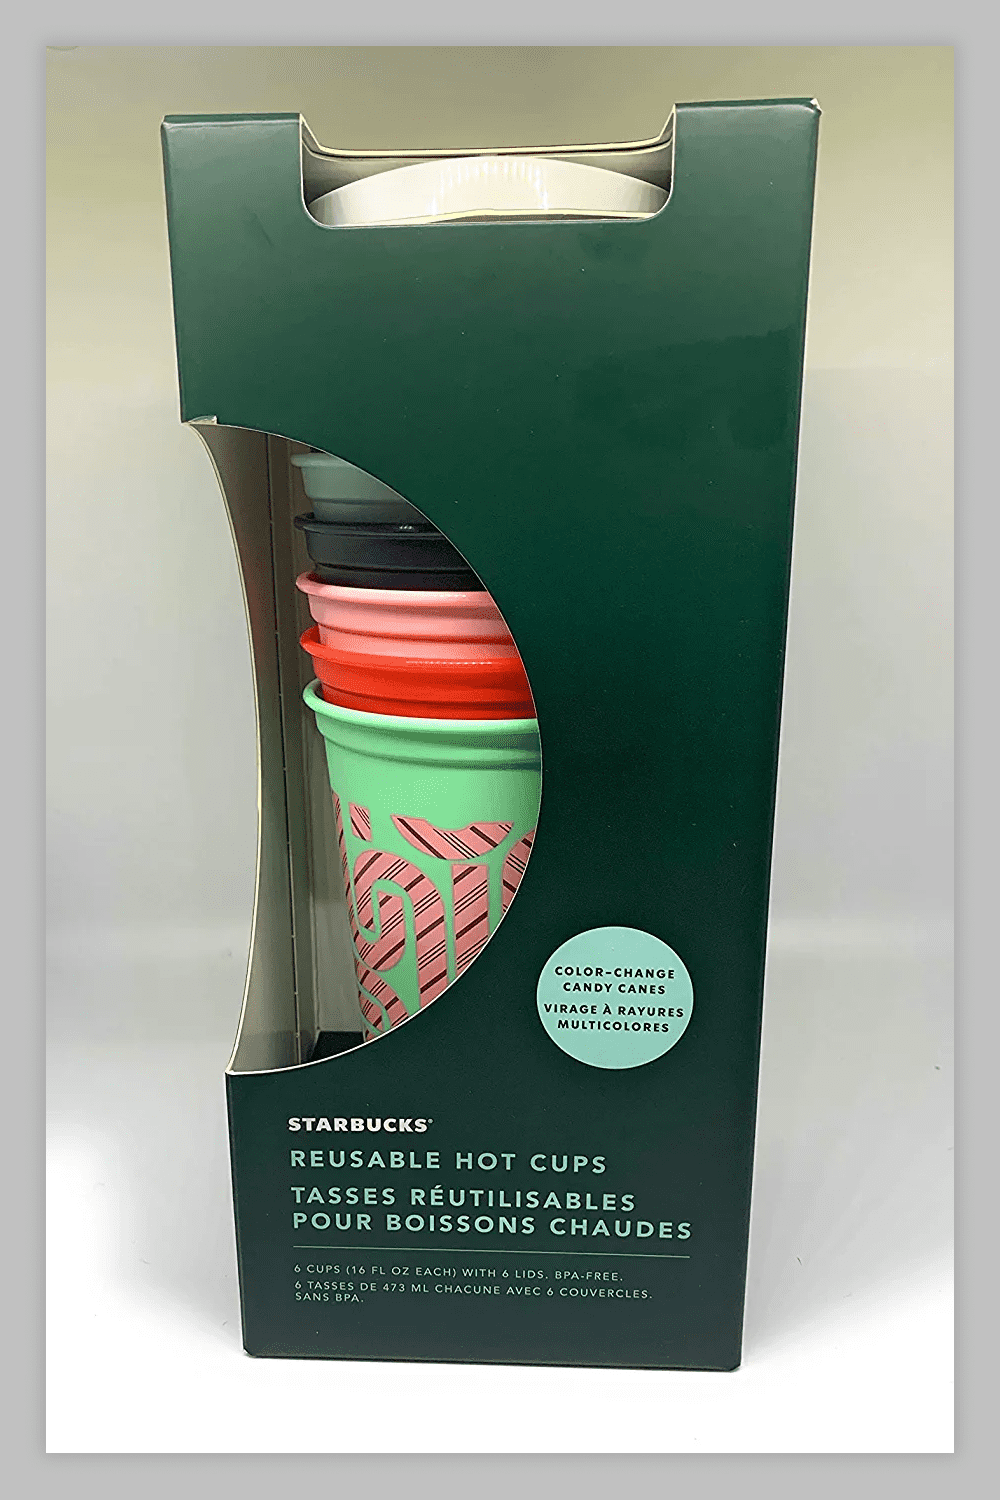 Starbucks Reusable Hot Cups in green box.